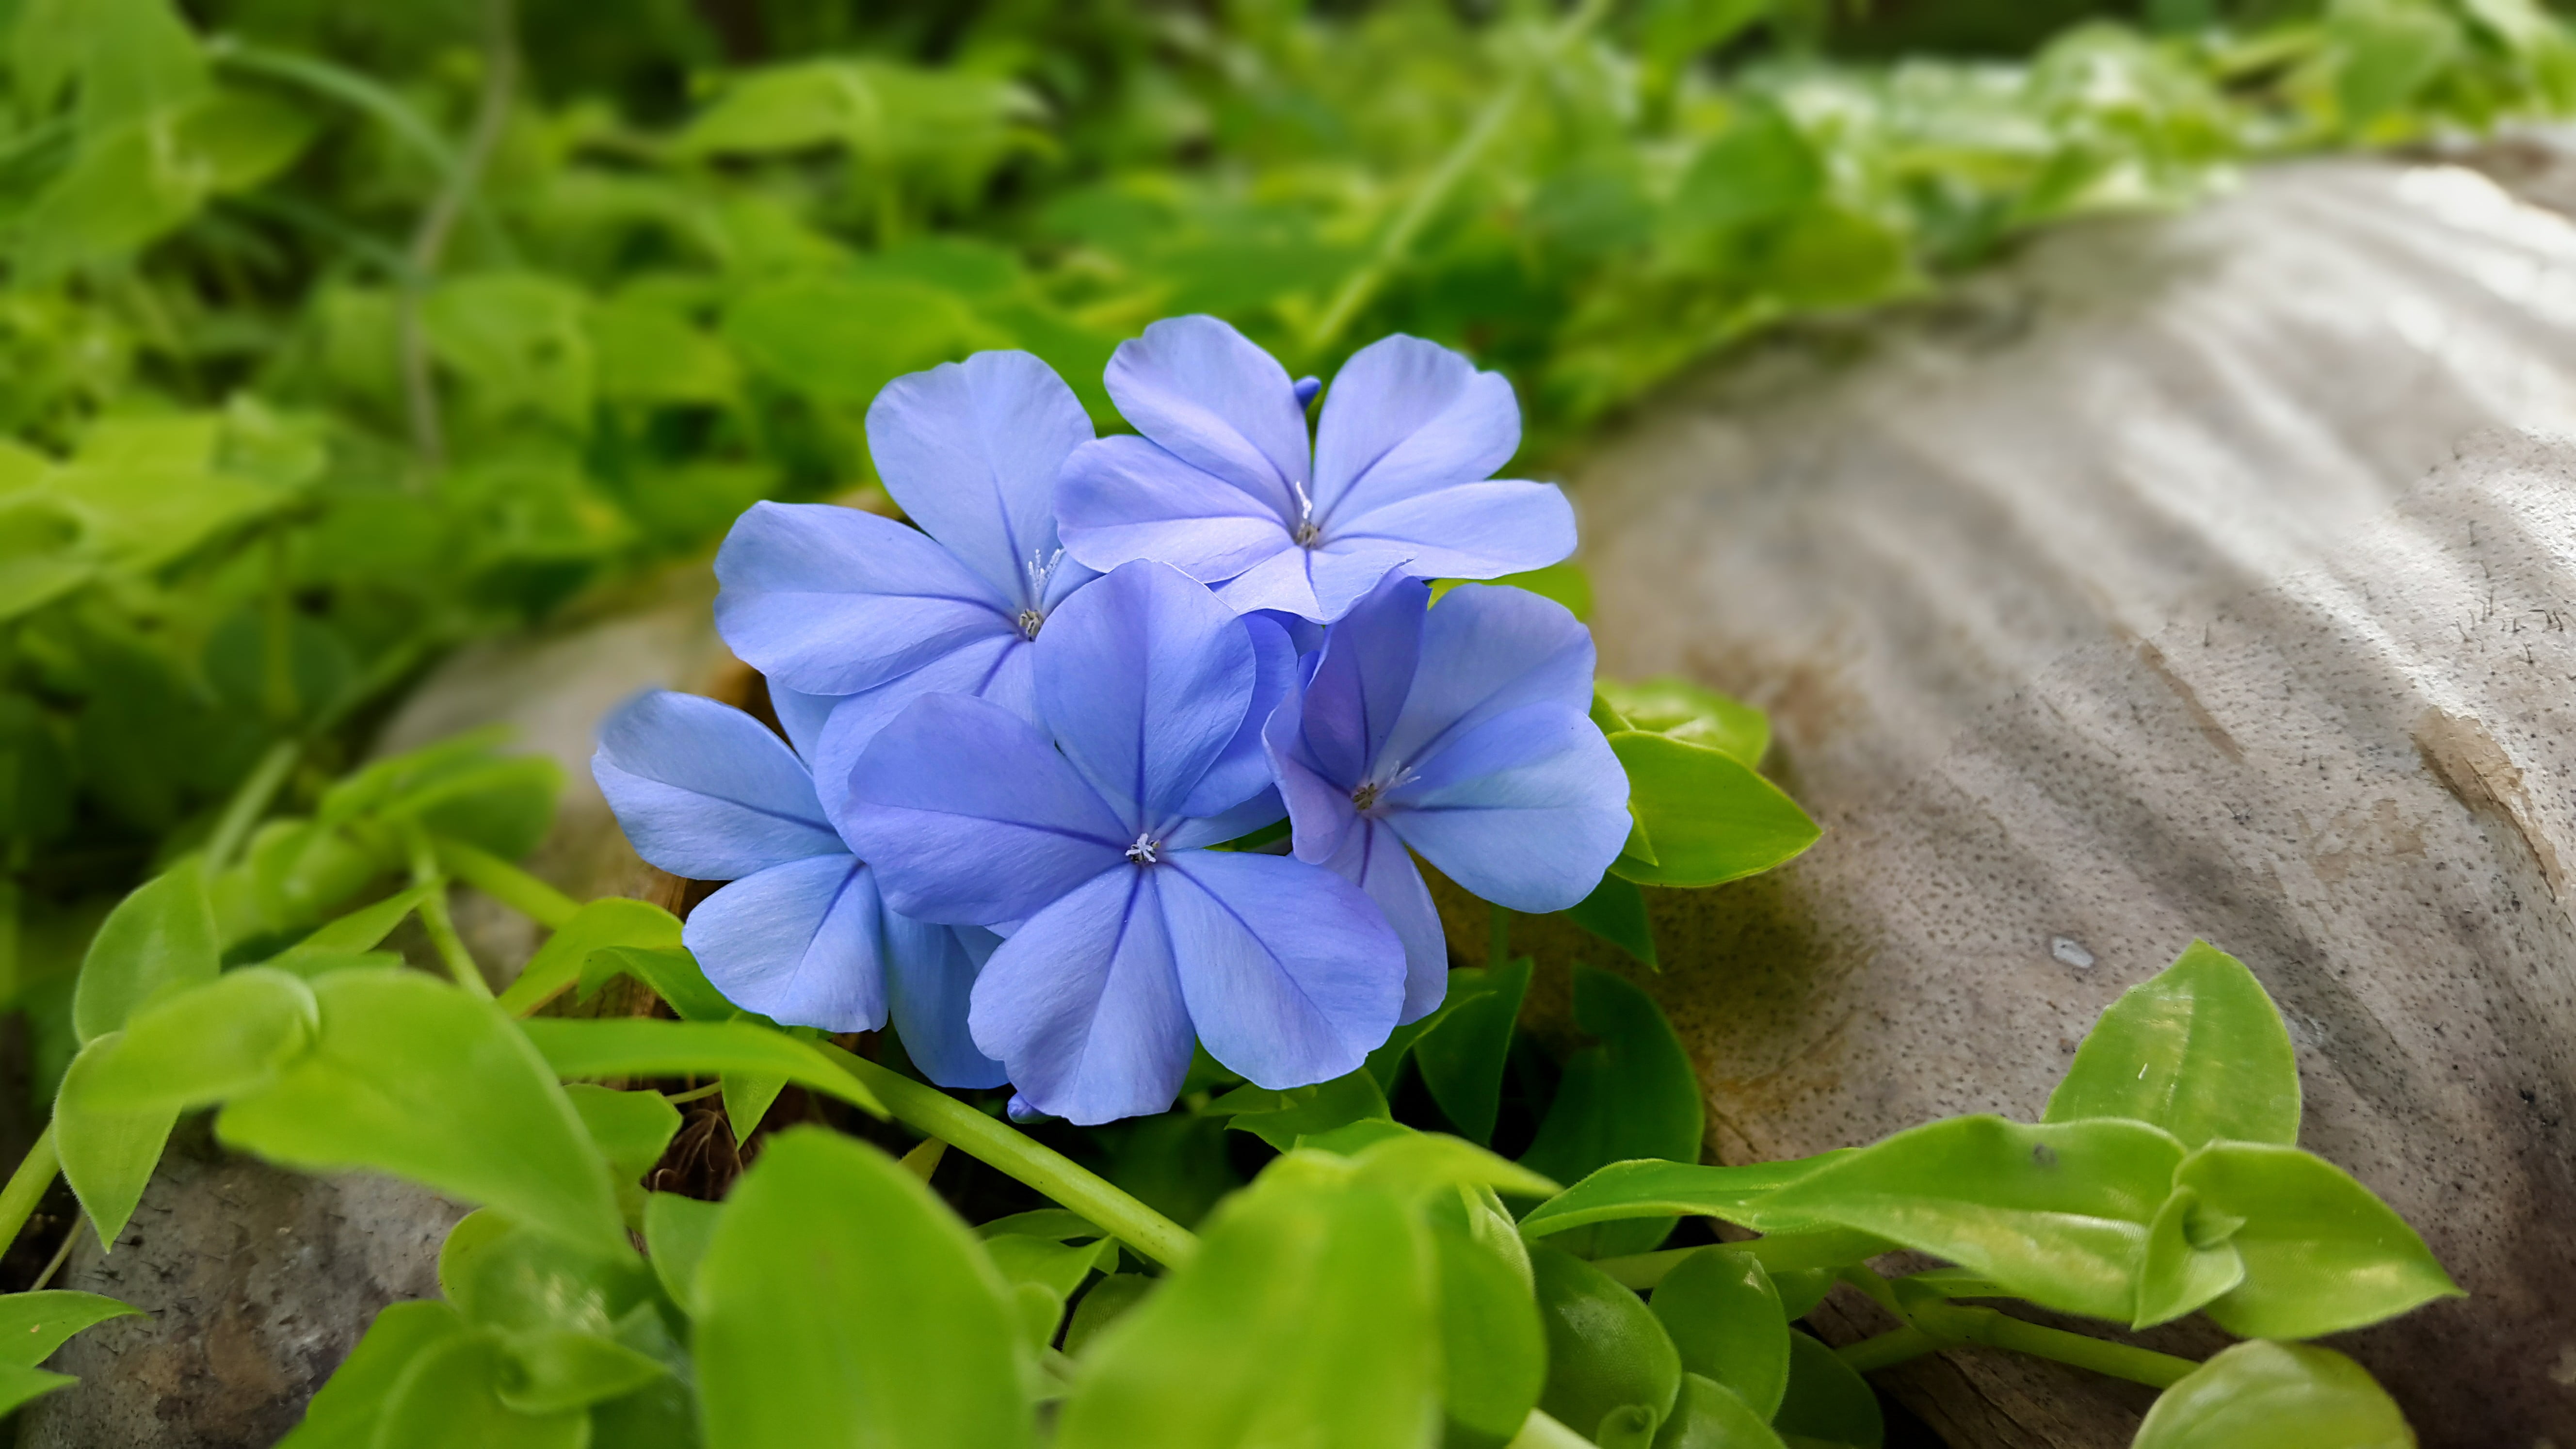 blue flowers, leaves, nature, plant, petal, flower Head, summer